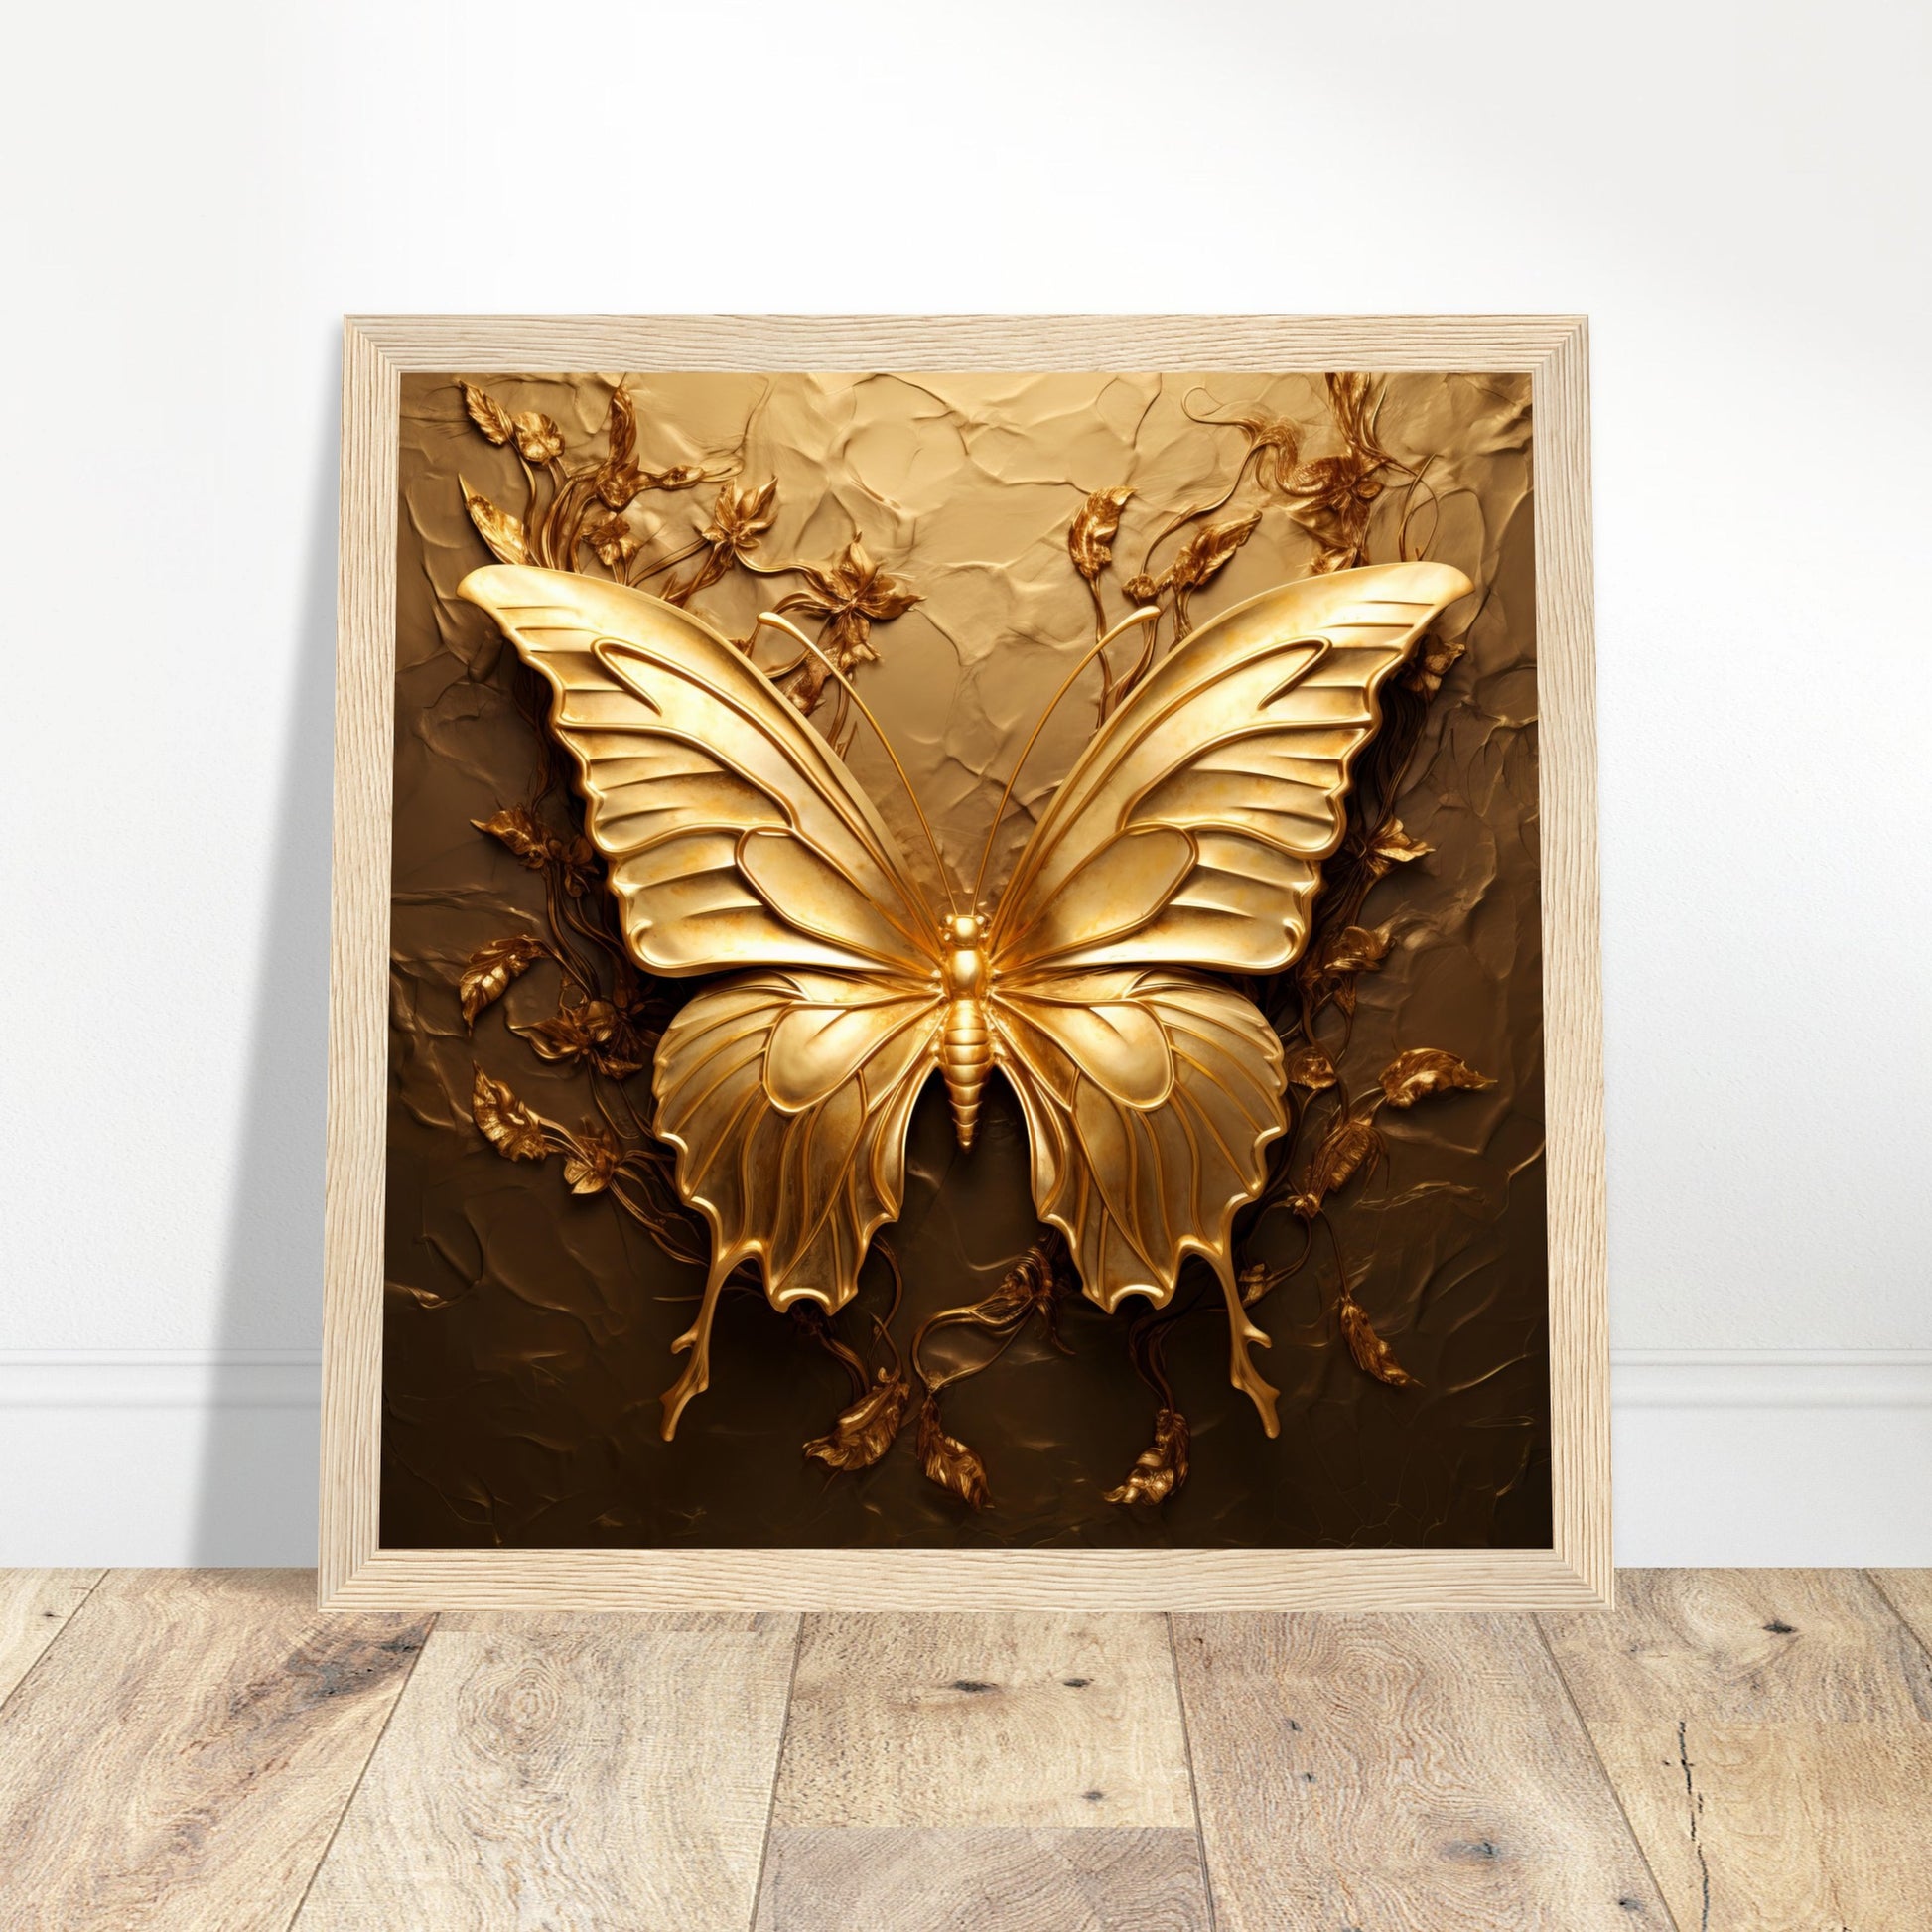 Gold Butterfly Artwork - Print Room Ltd Black frame 30x30 cm / 12x12"